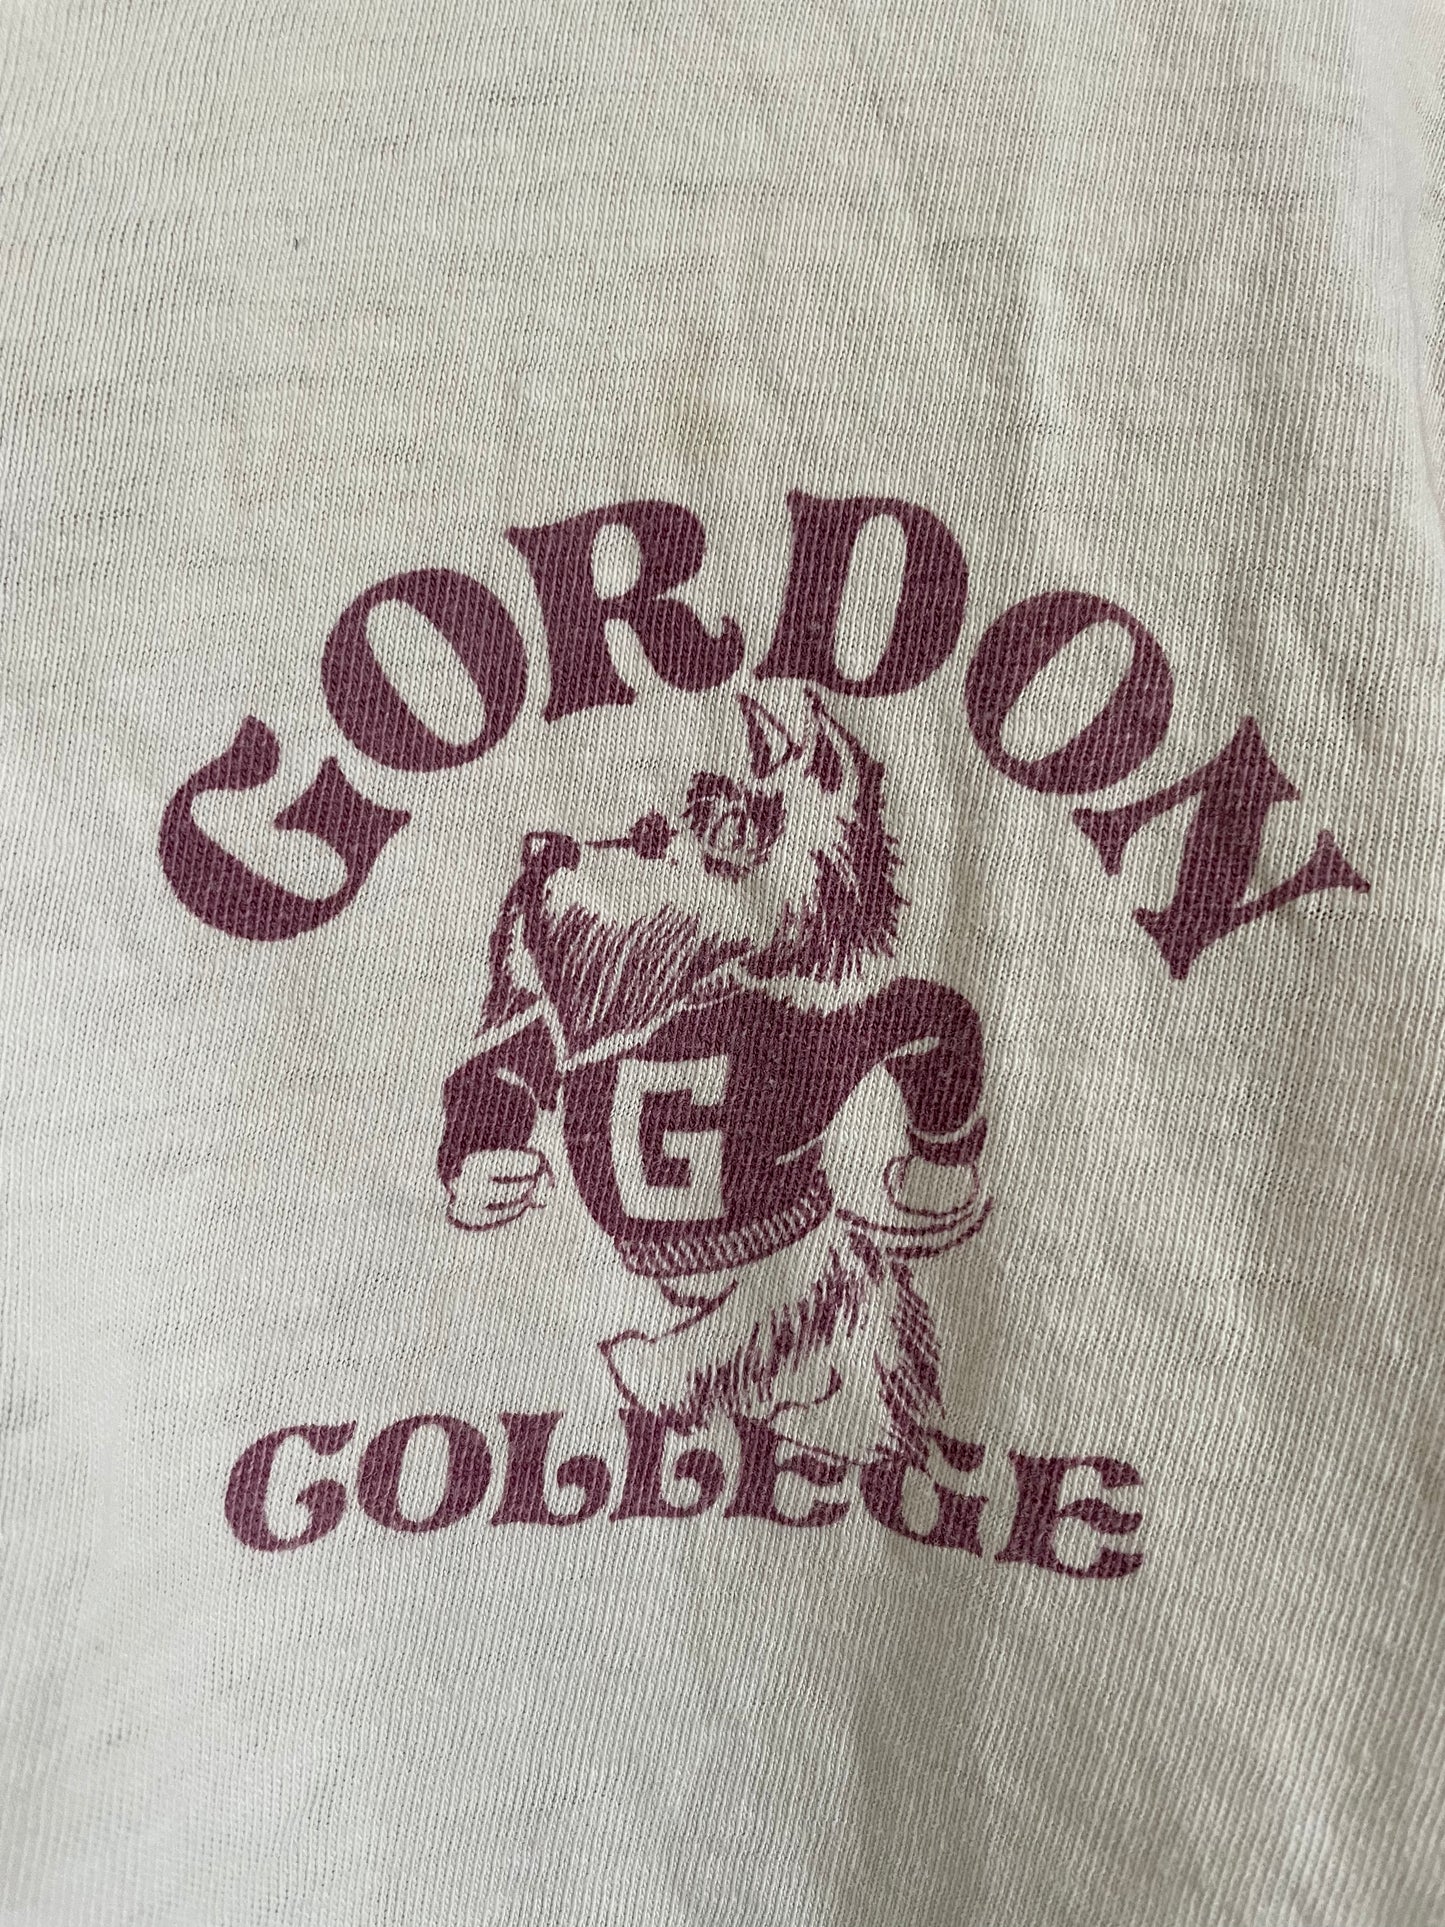 80s Gordon College Henley Tee